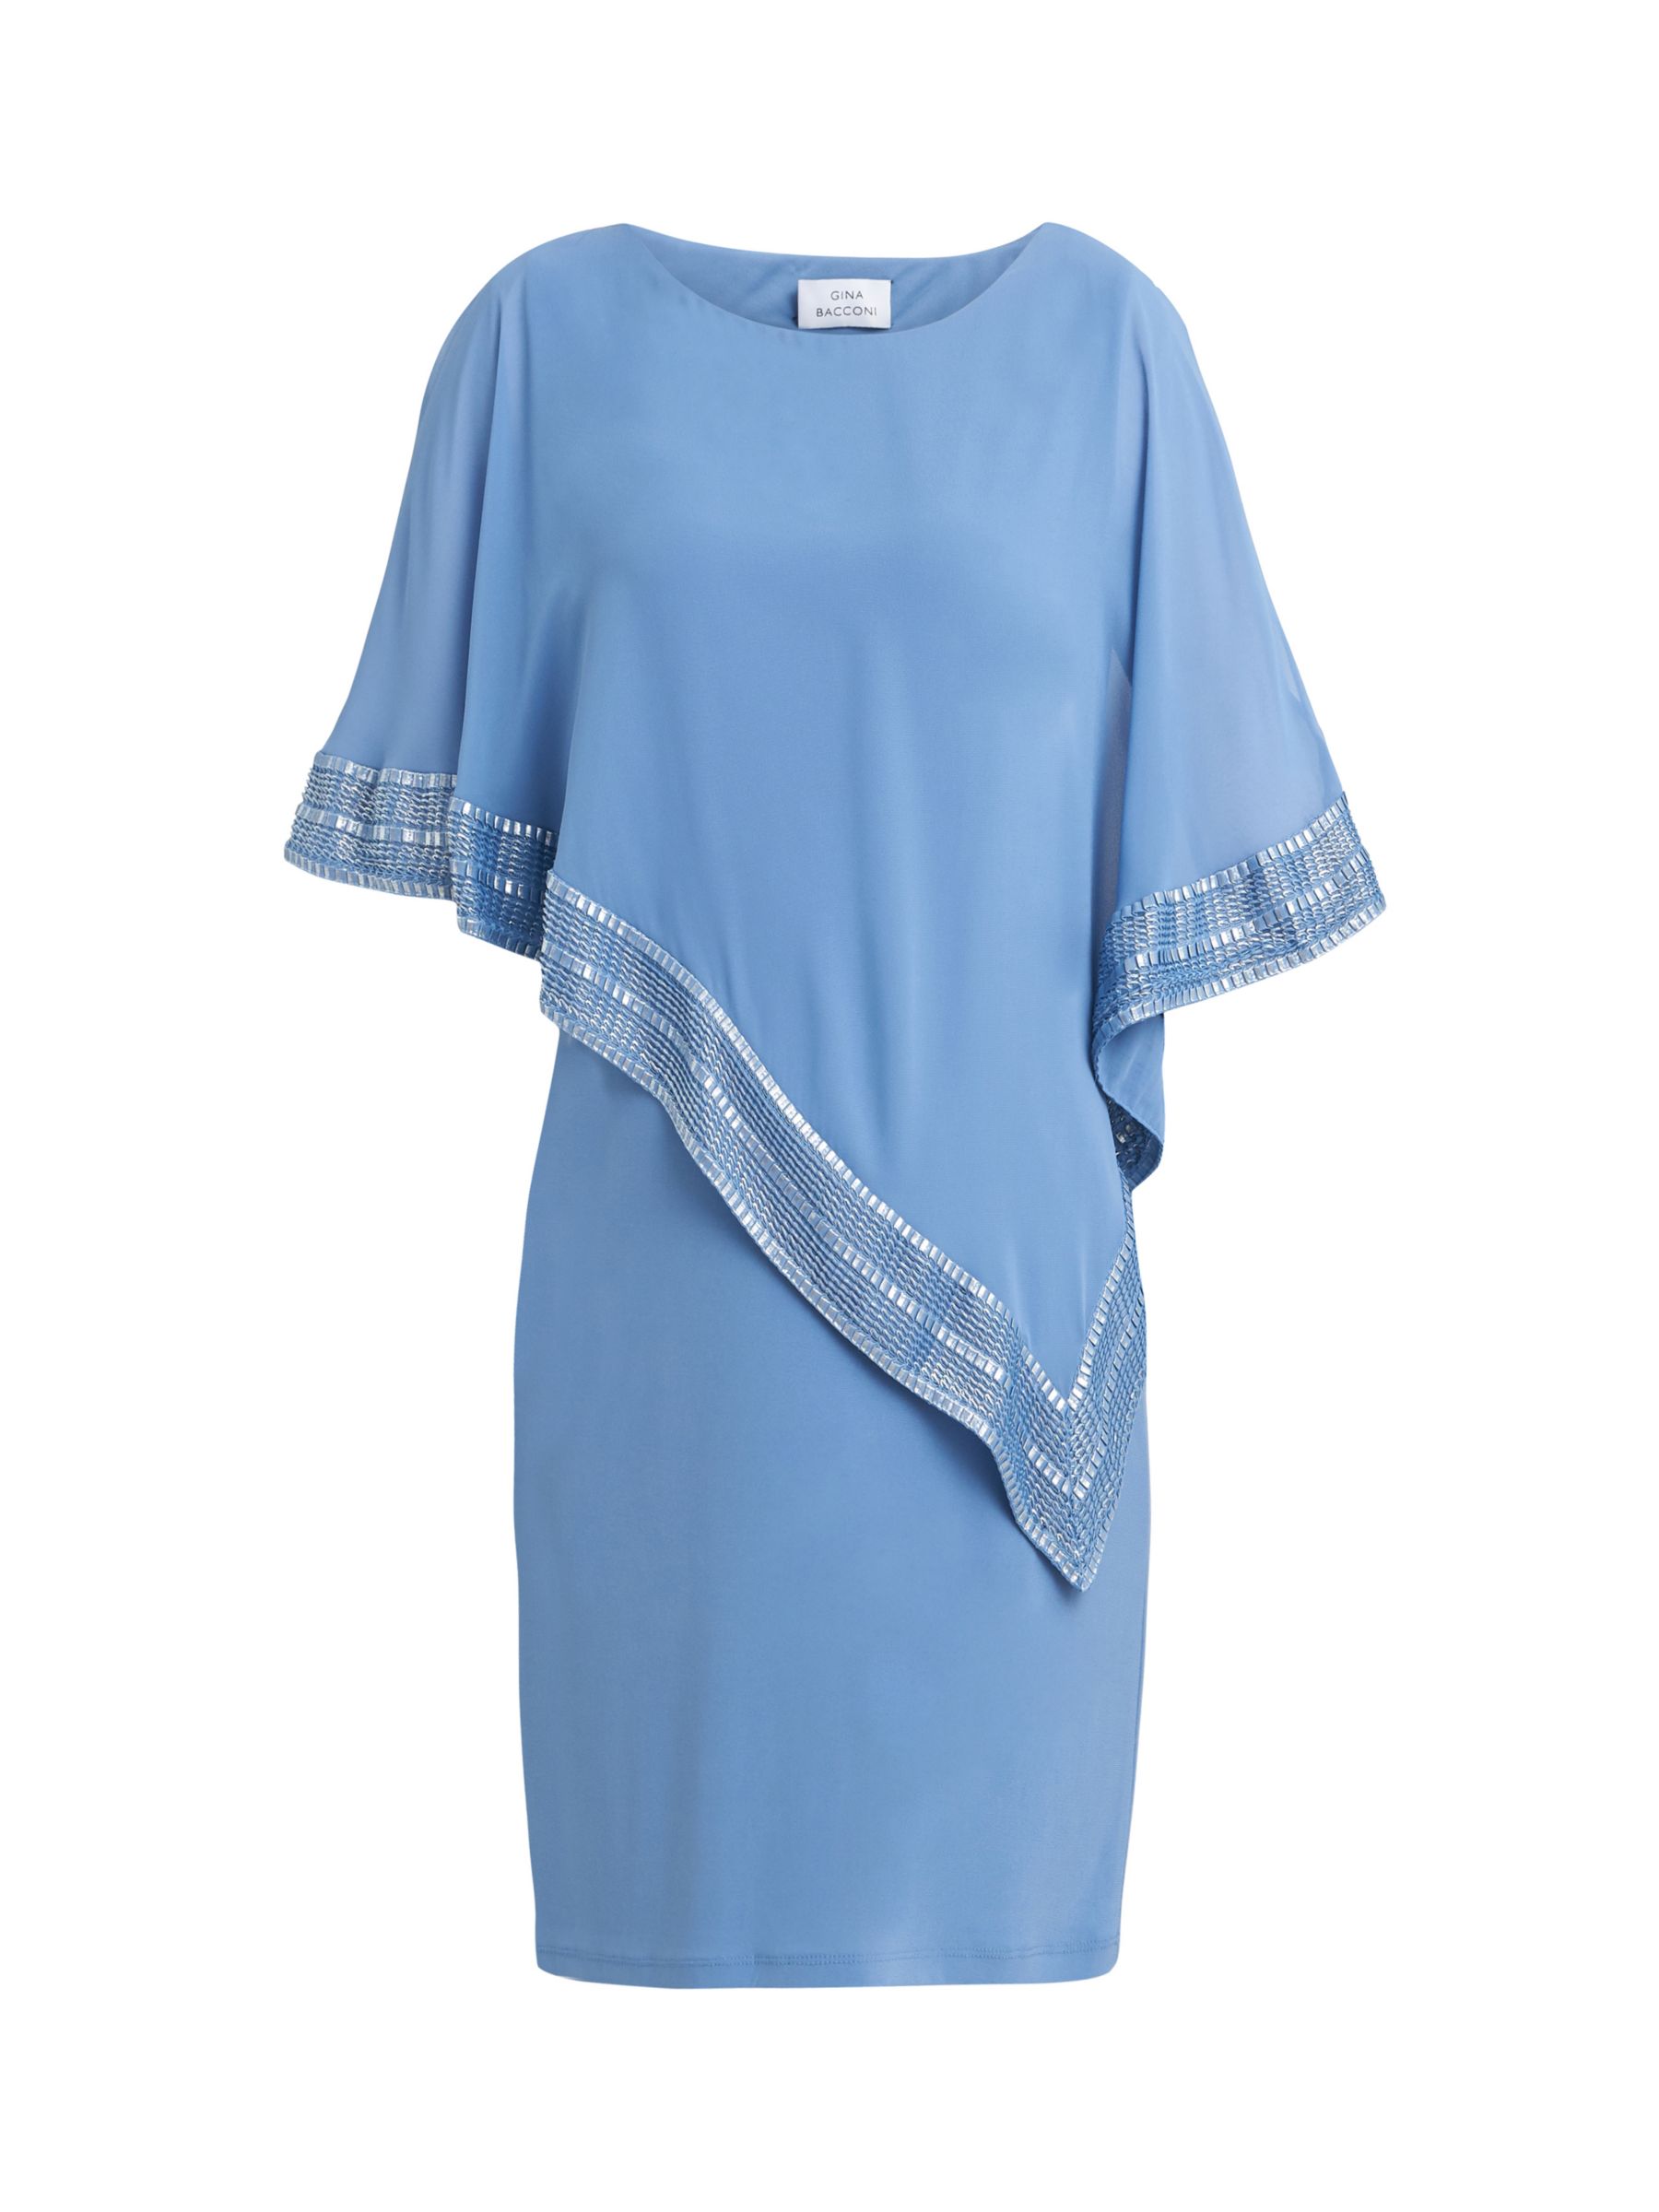 Gina Bacconi Lucy Metallic Trim Cape Dress, Silver Blue, 10